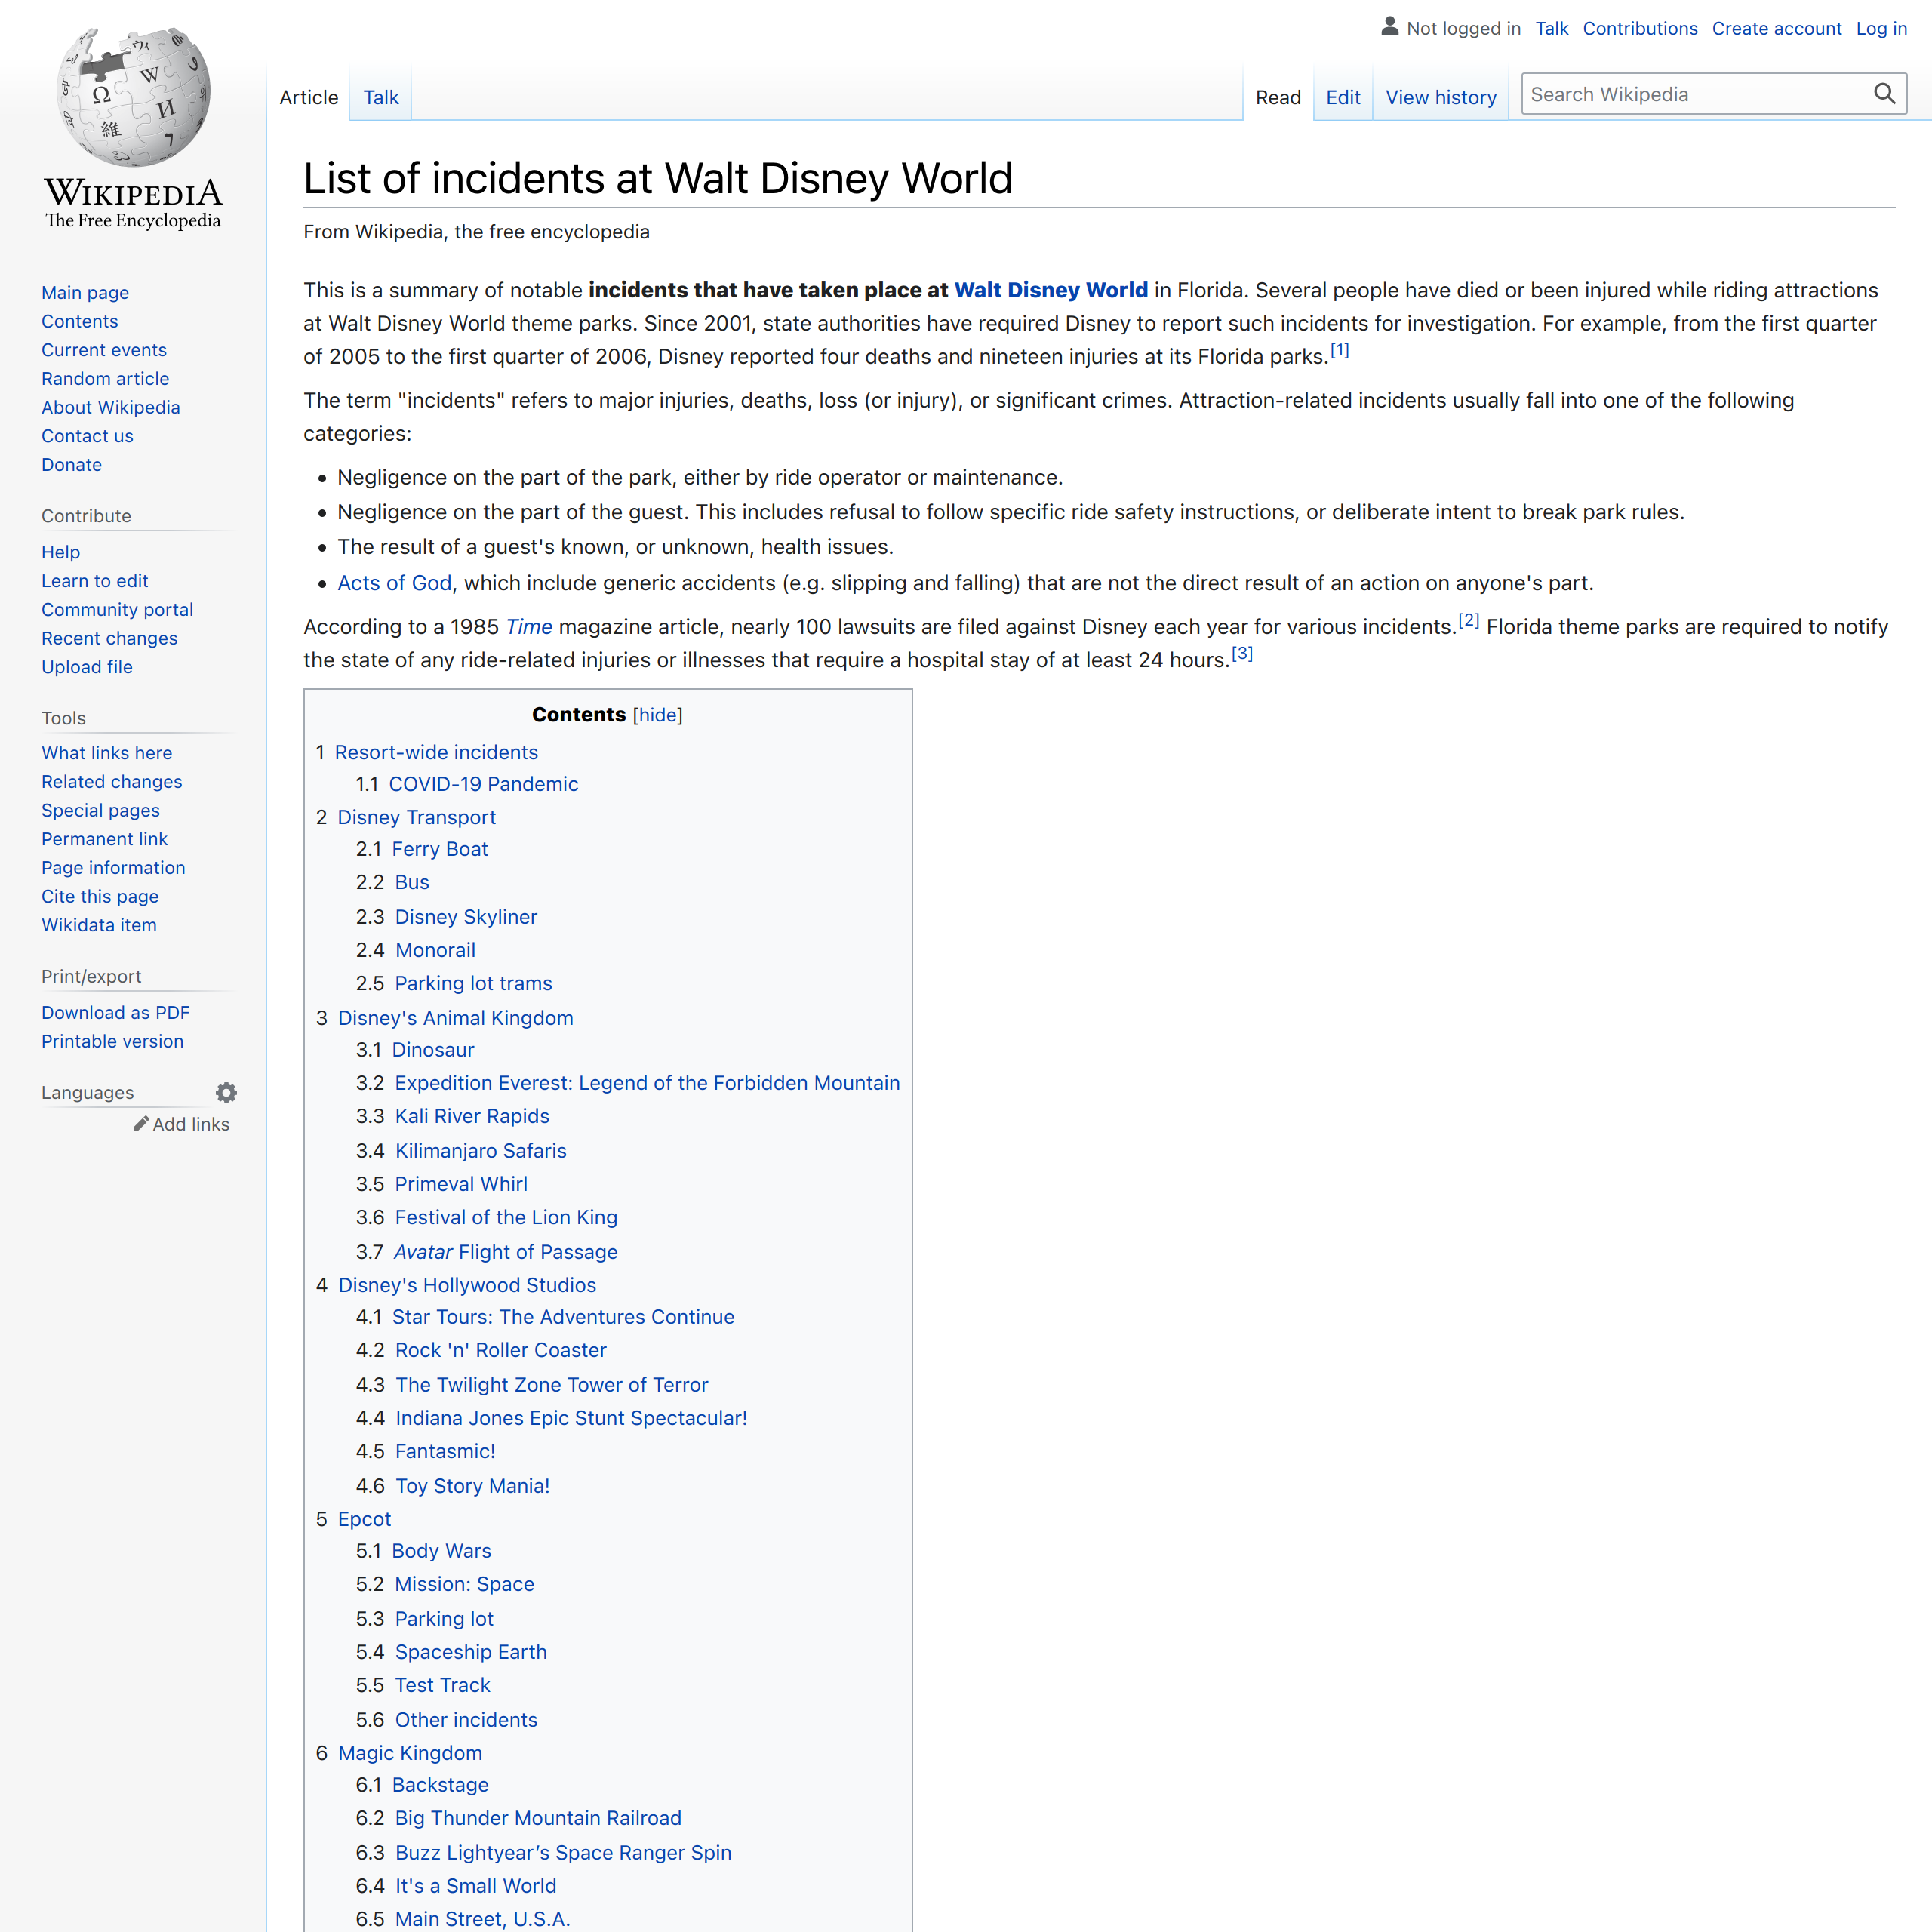 Dinosaur (Disney's Animal Kingdom) - Wikipedia